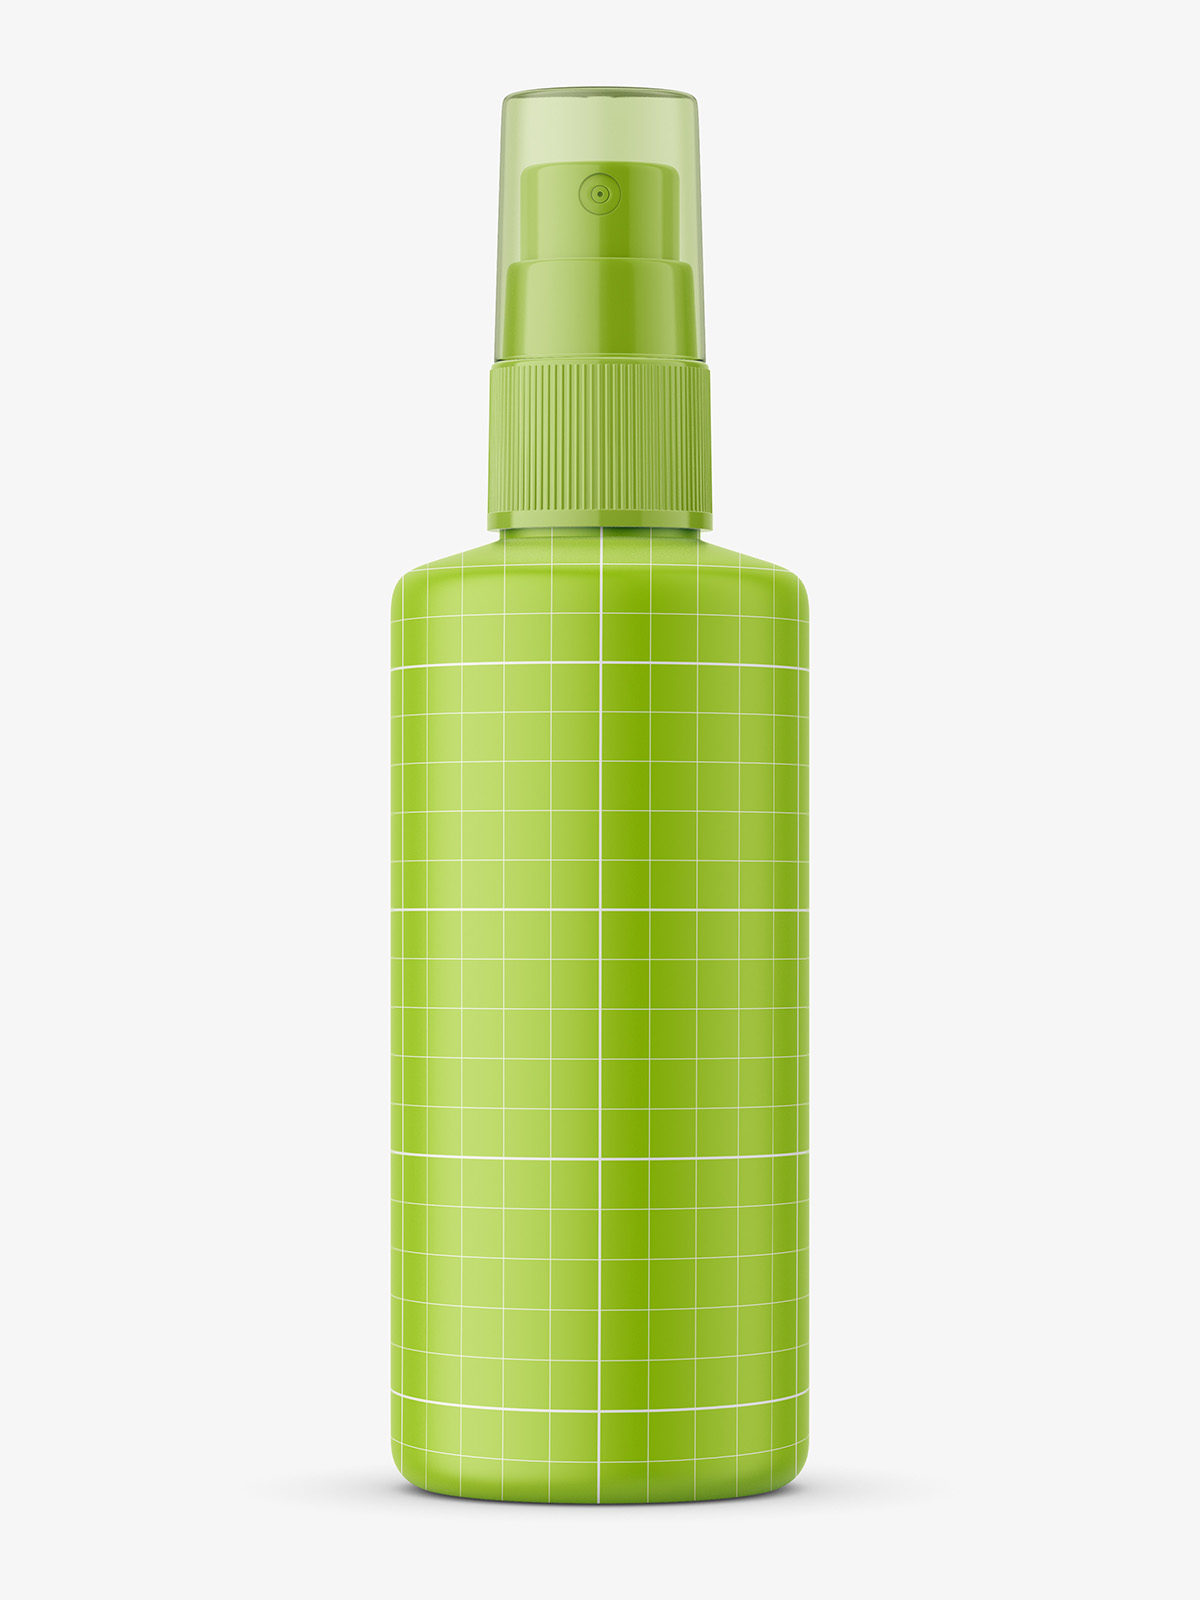 Mist spray bottle mockup / 100 ml - Smarty Mockups